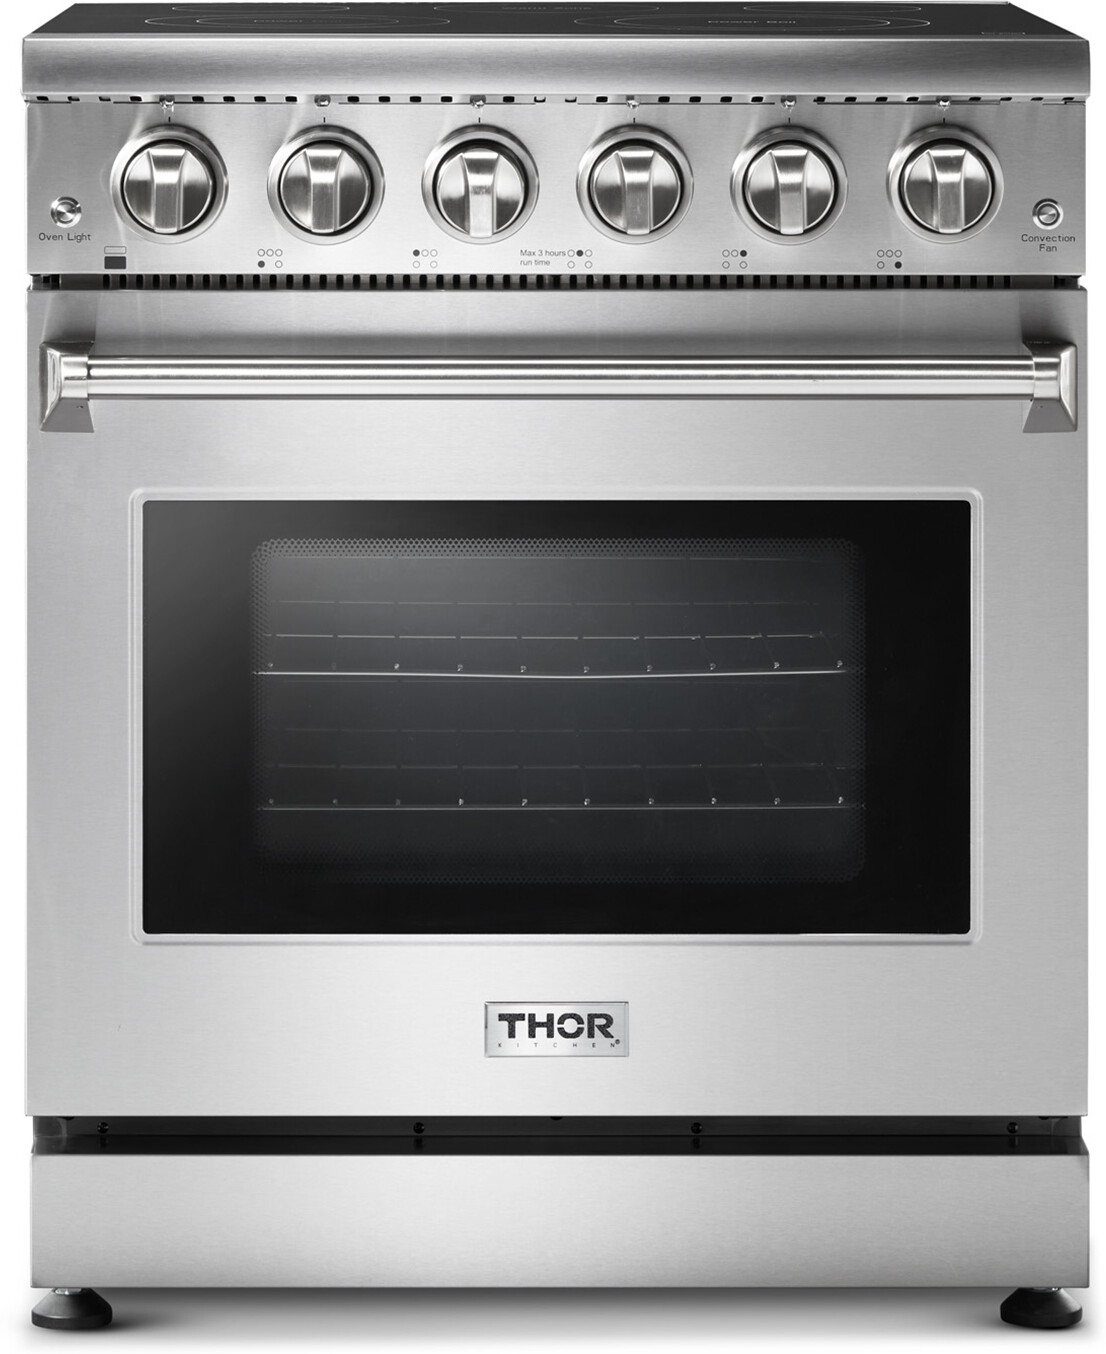 30"" Freestanding Electric Range - Thor Kitchen HRE3001